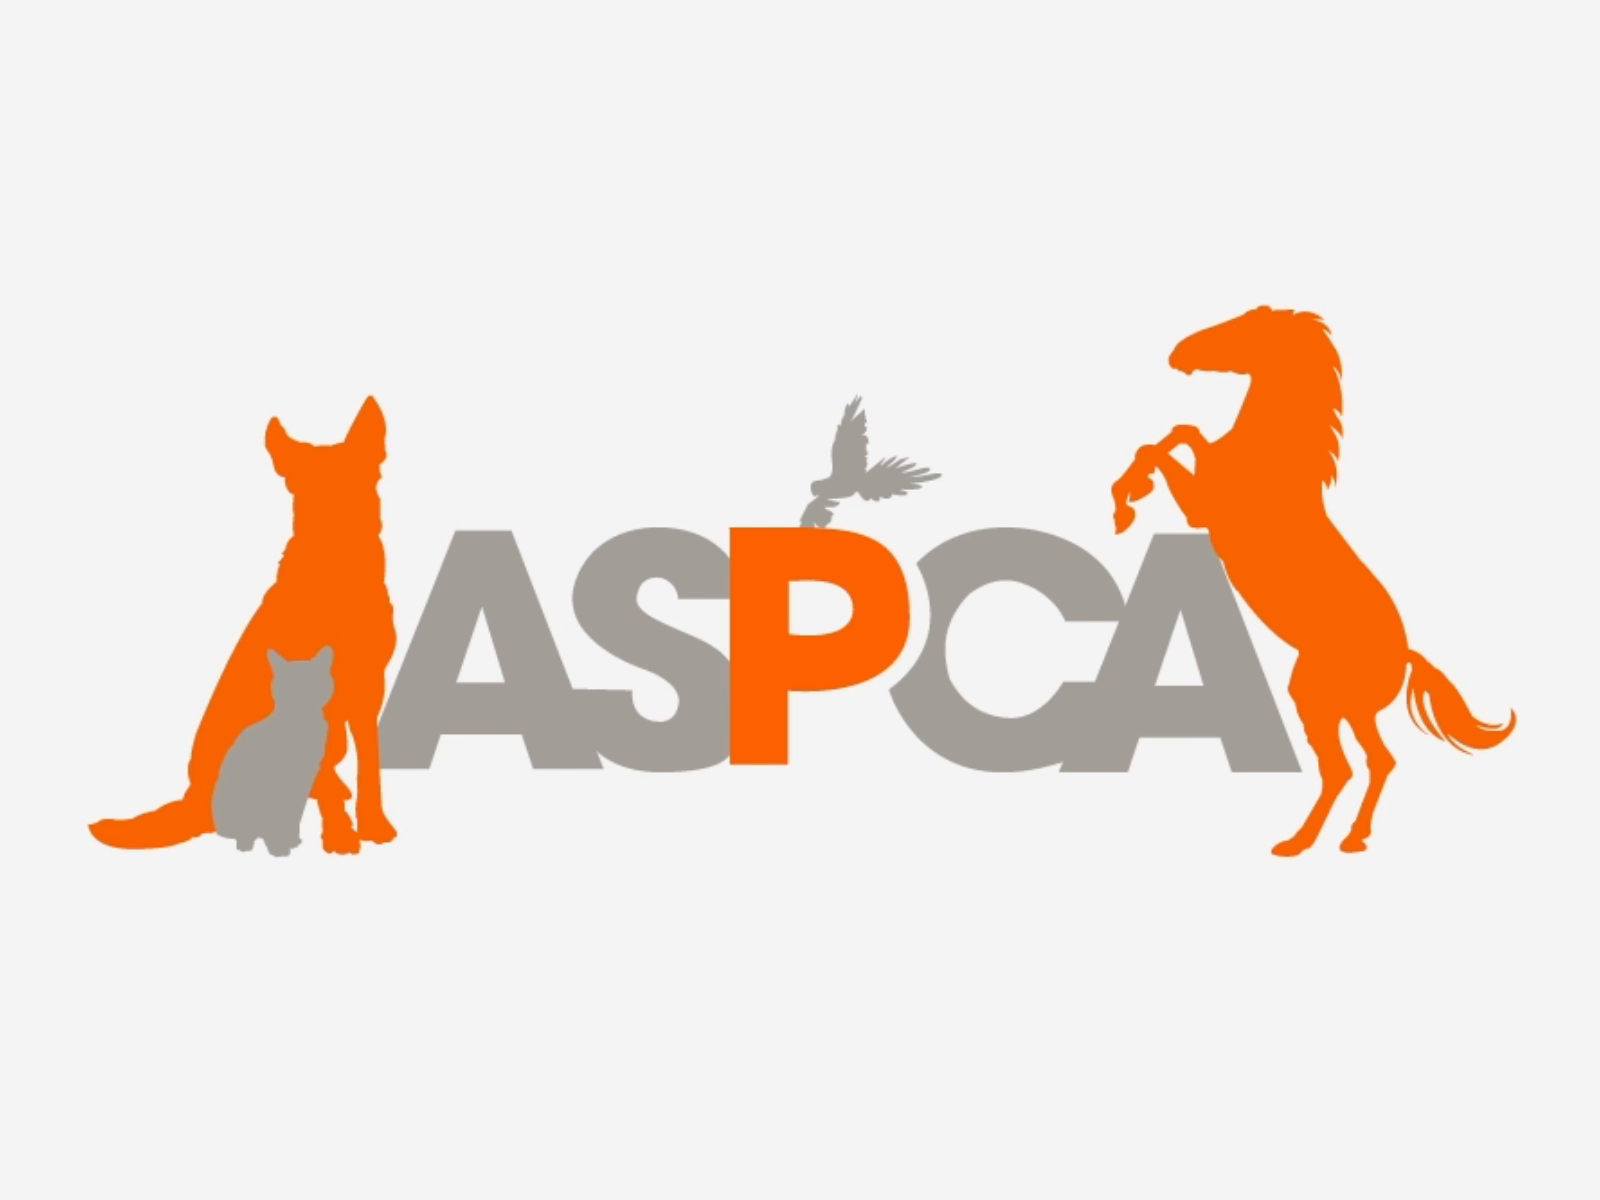 Aspca Logo Animation By Allie On Dribbble